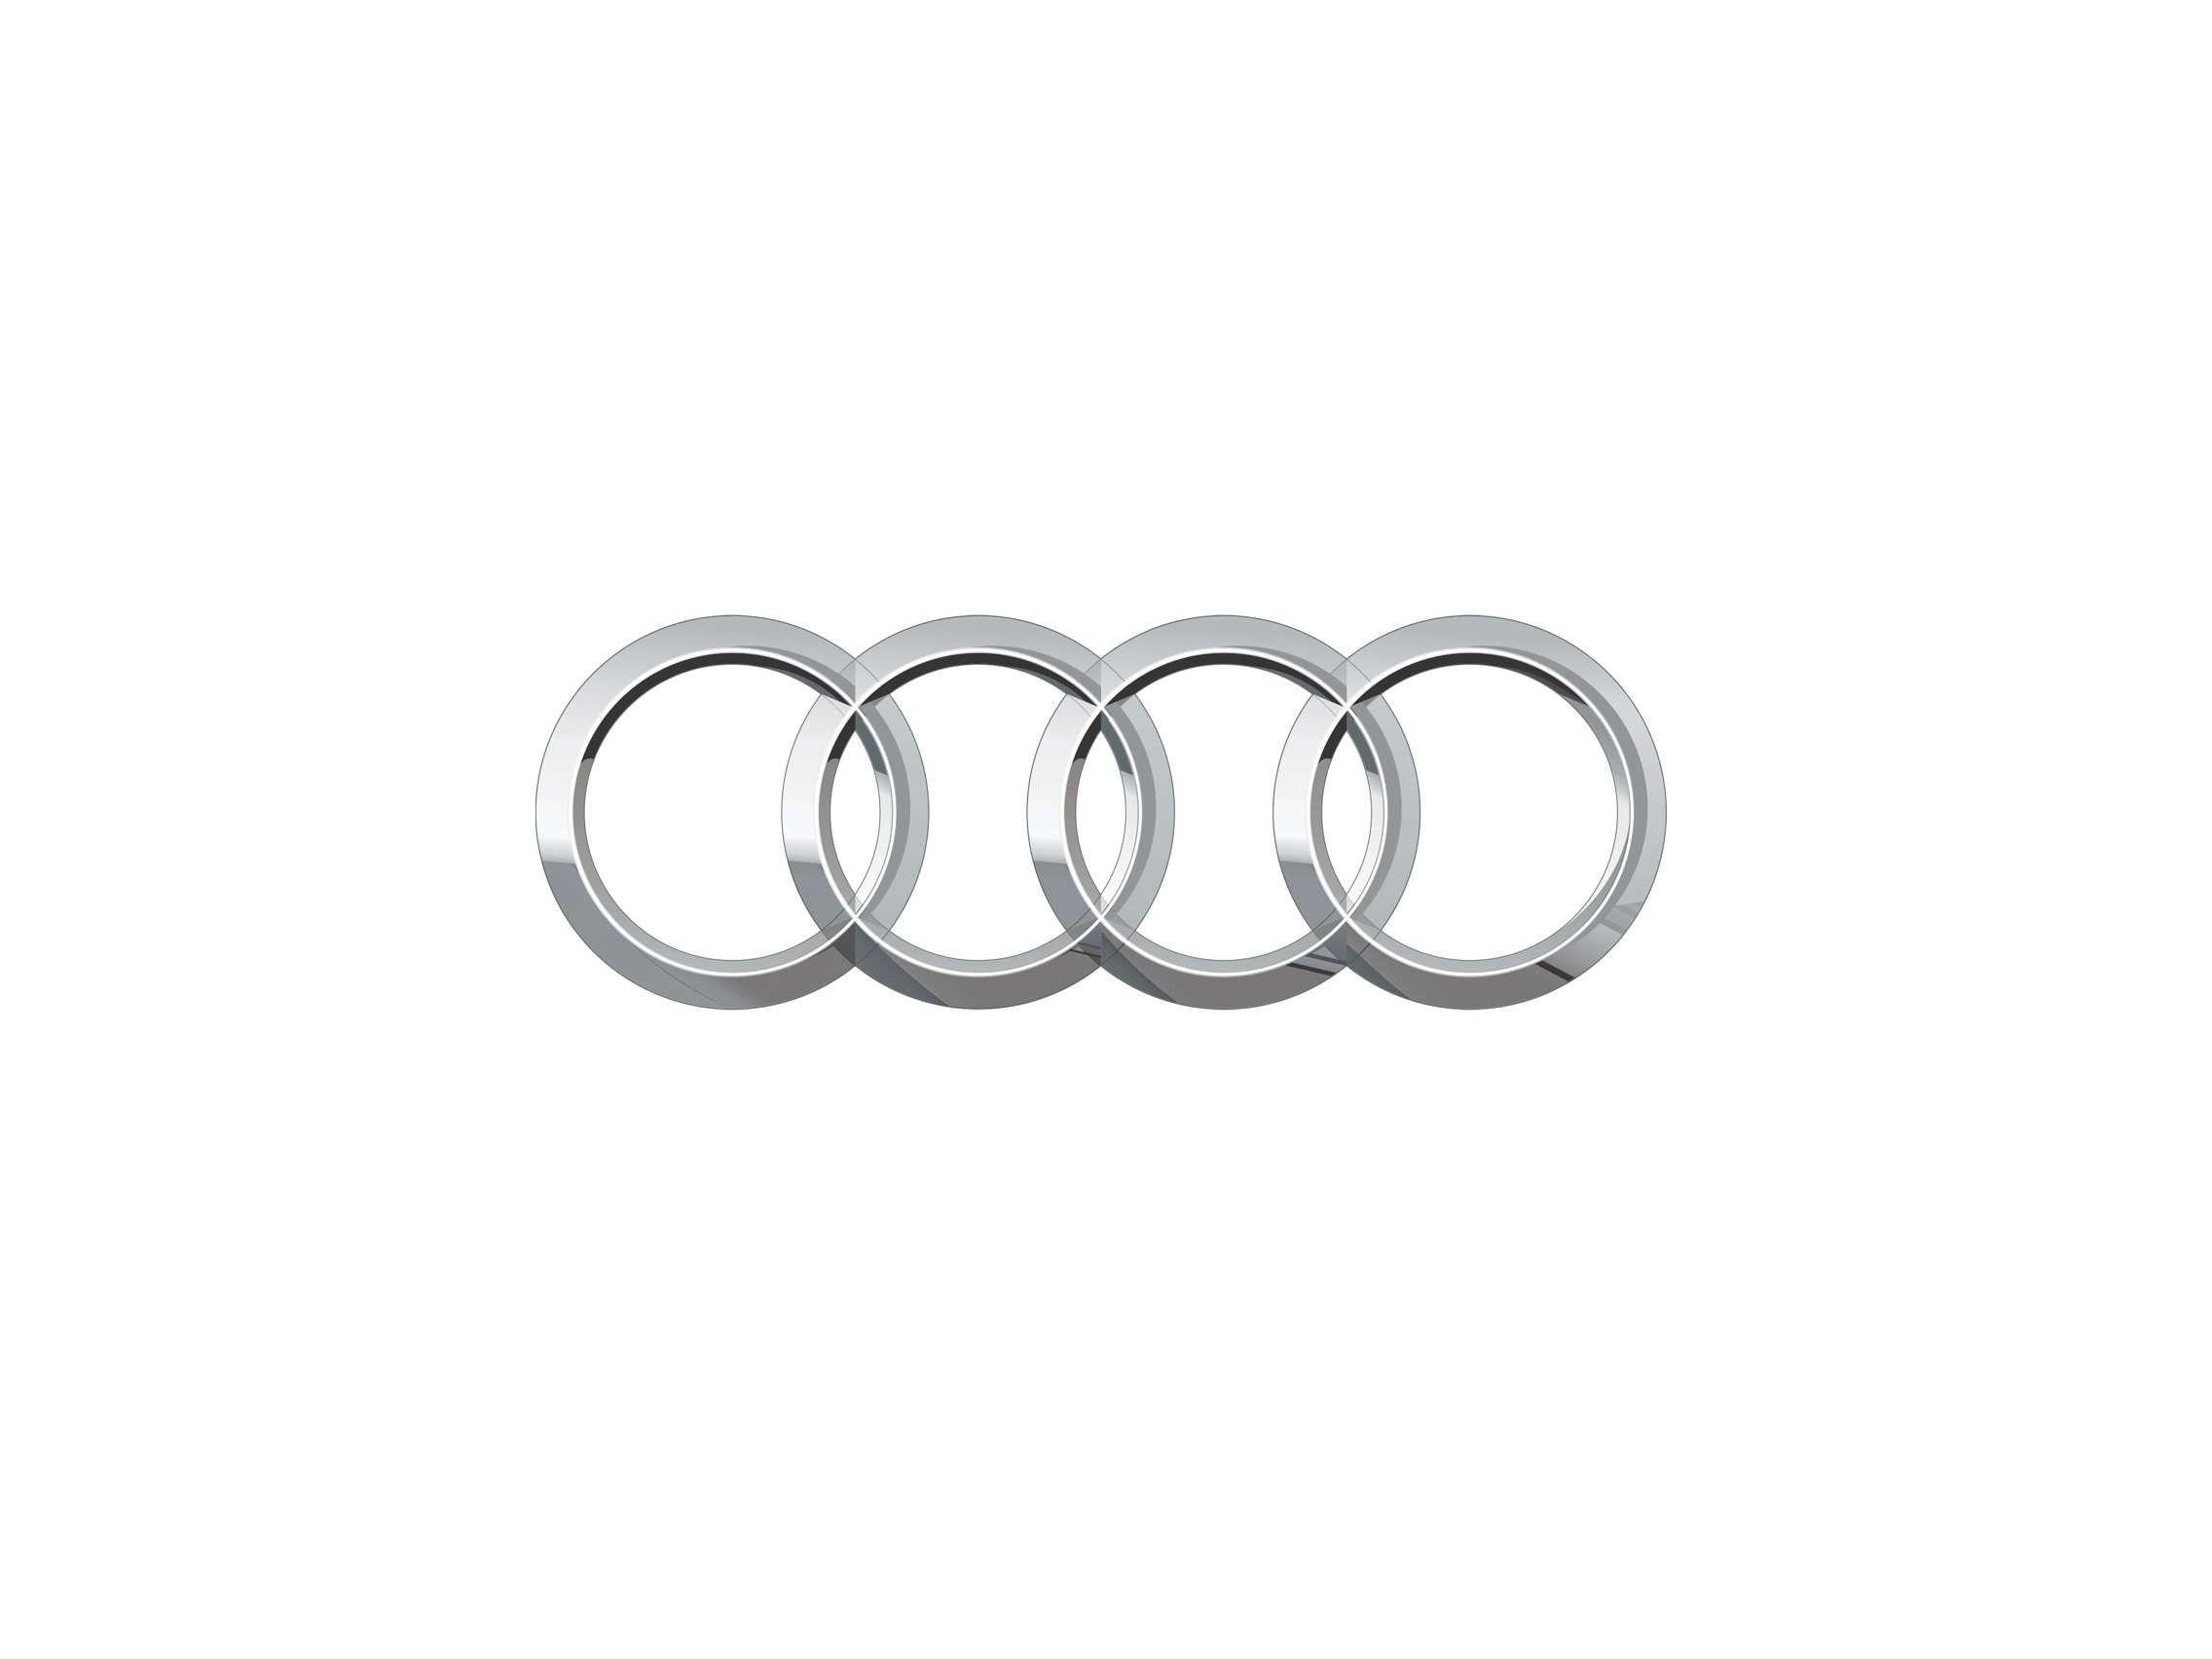 Audi Sport Logo Wallpapers - Top Free Audi Sport Logo Backgrounds ...